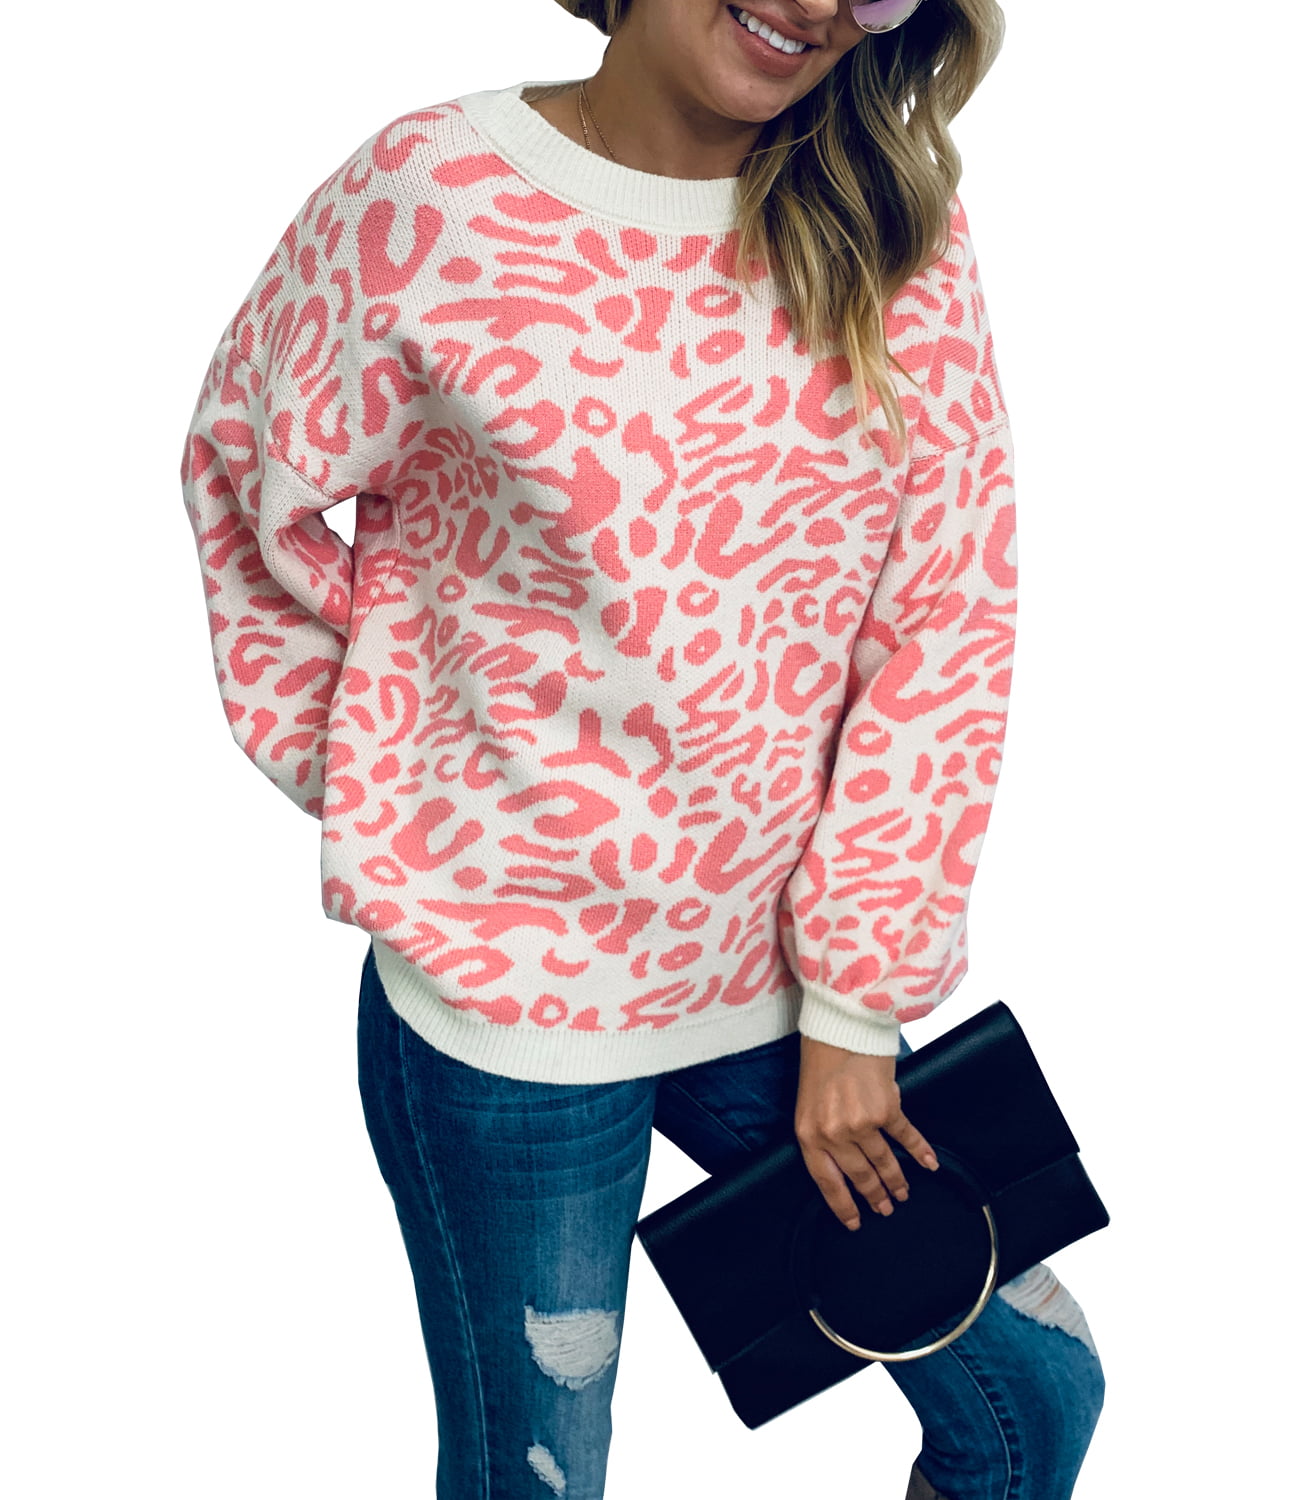 Cromoncent Girl Leopard Slim Fit Cute Jumper Pullover Knit Sweater